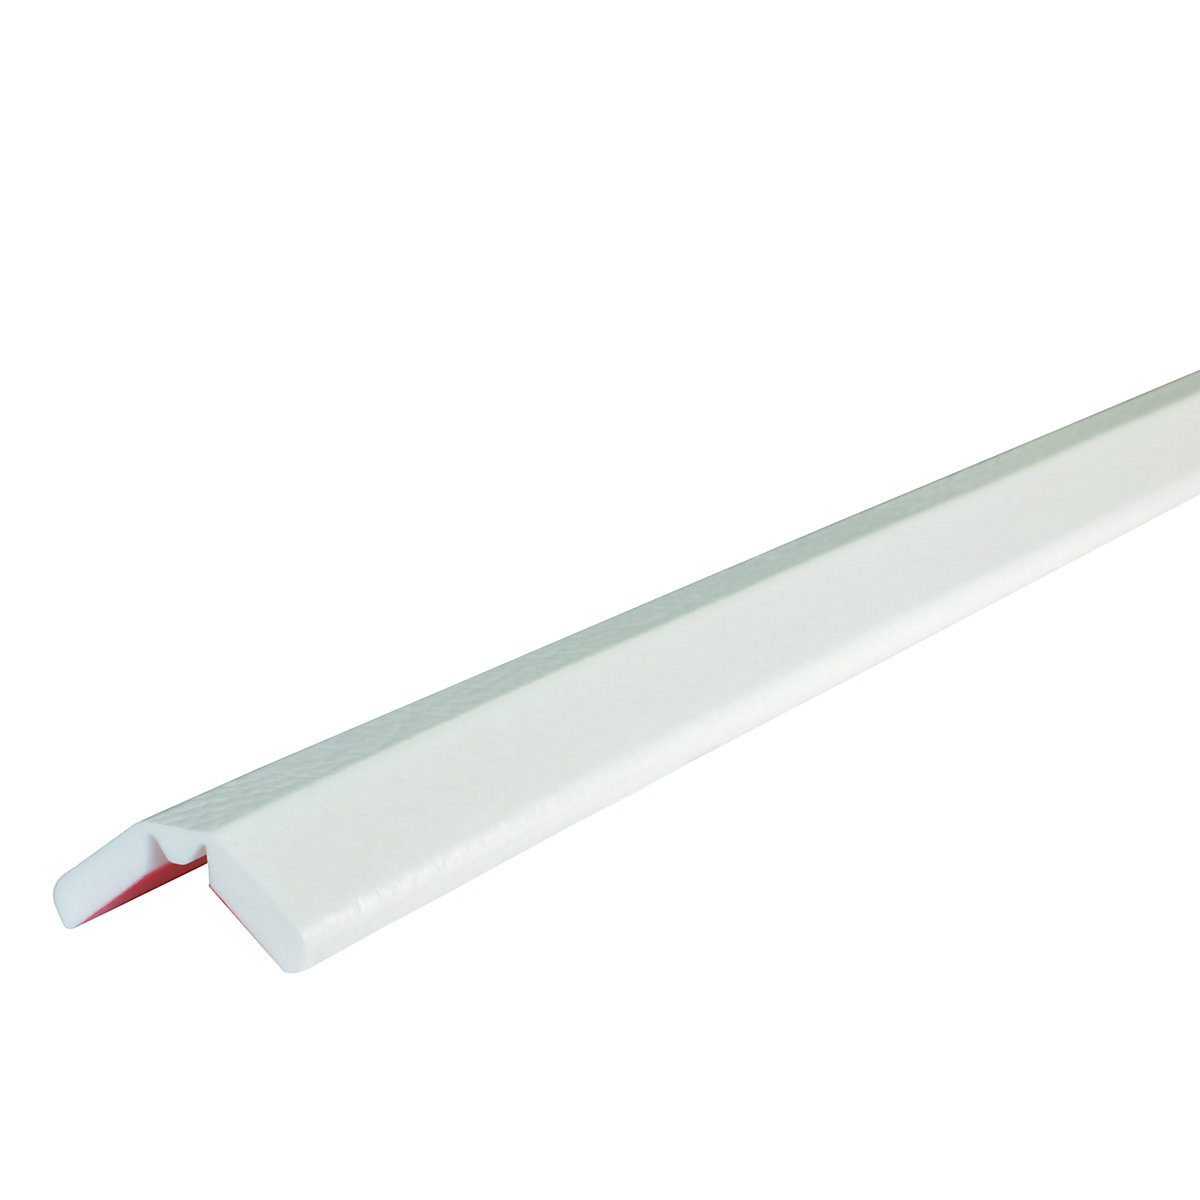 Knuffi® corner protection – SHG, type W, 1 x 5 m roll, white-13